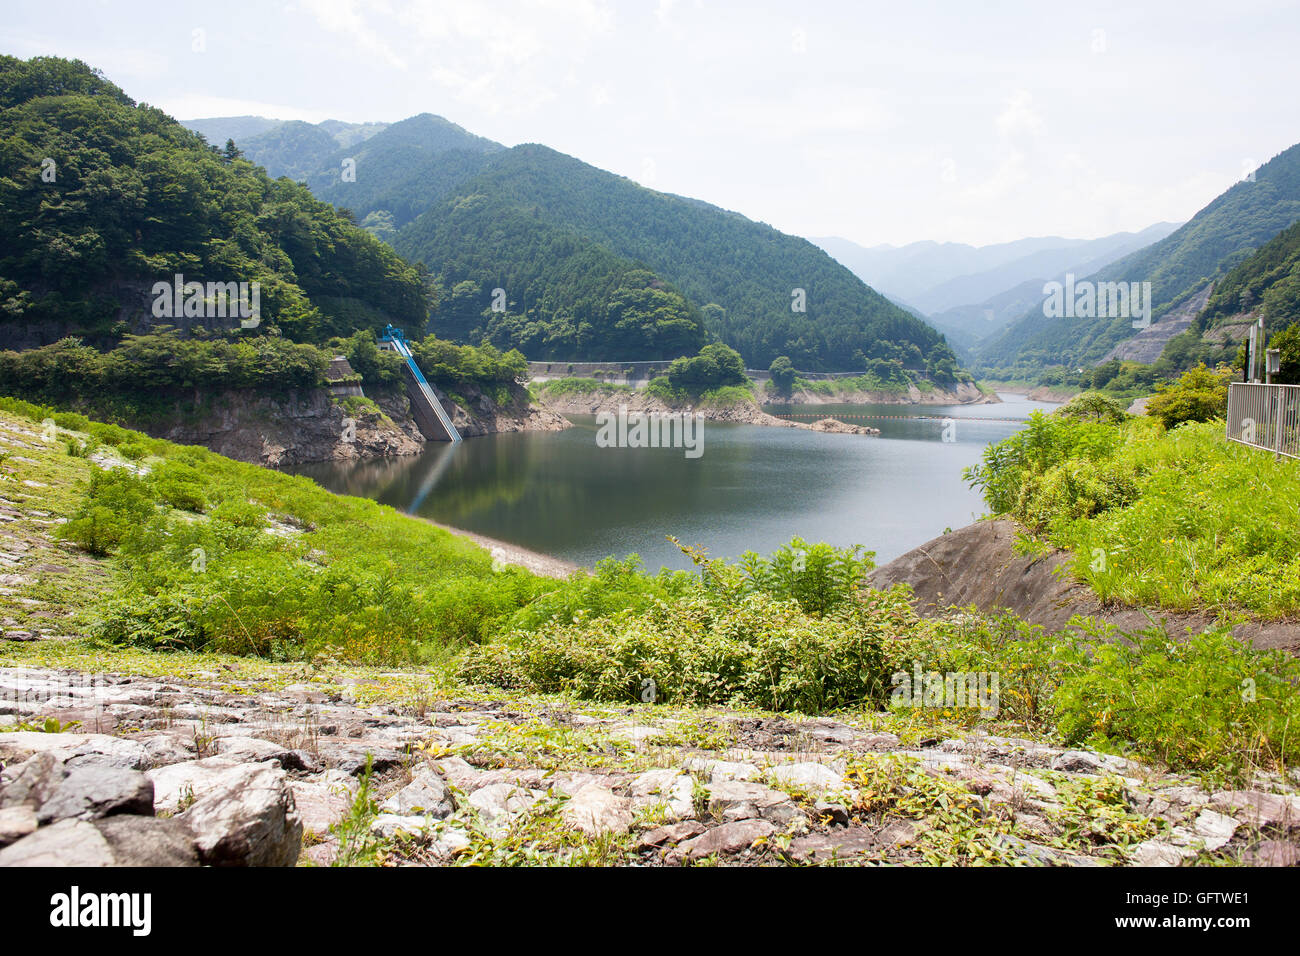 Rockfill dam in Japan in summer Stock Photo